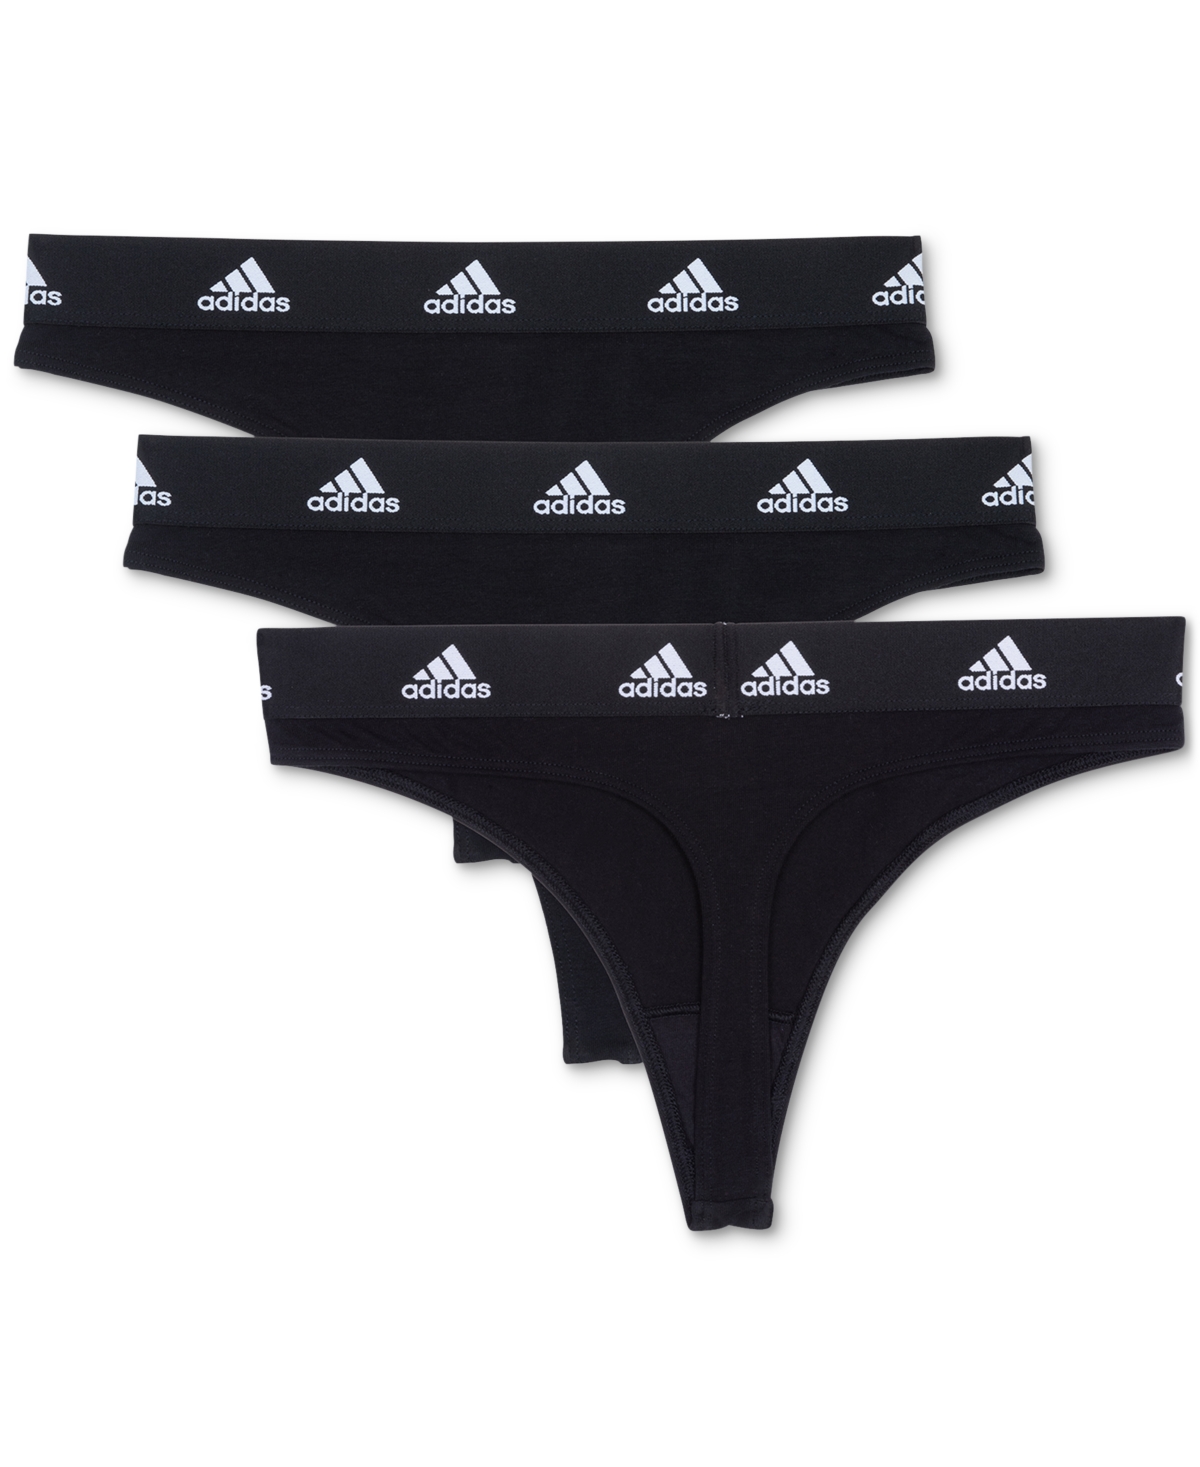 Adidas Originals Intimates Women's 3-pk. Active Comfort Cotton Thong Underwear 4a3p79 In Black